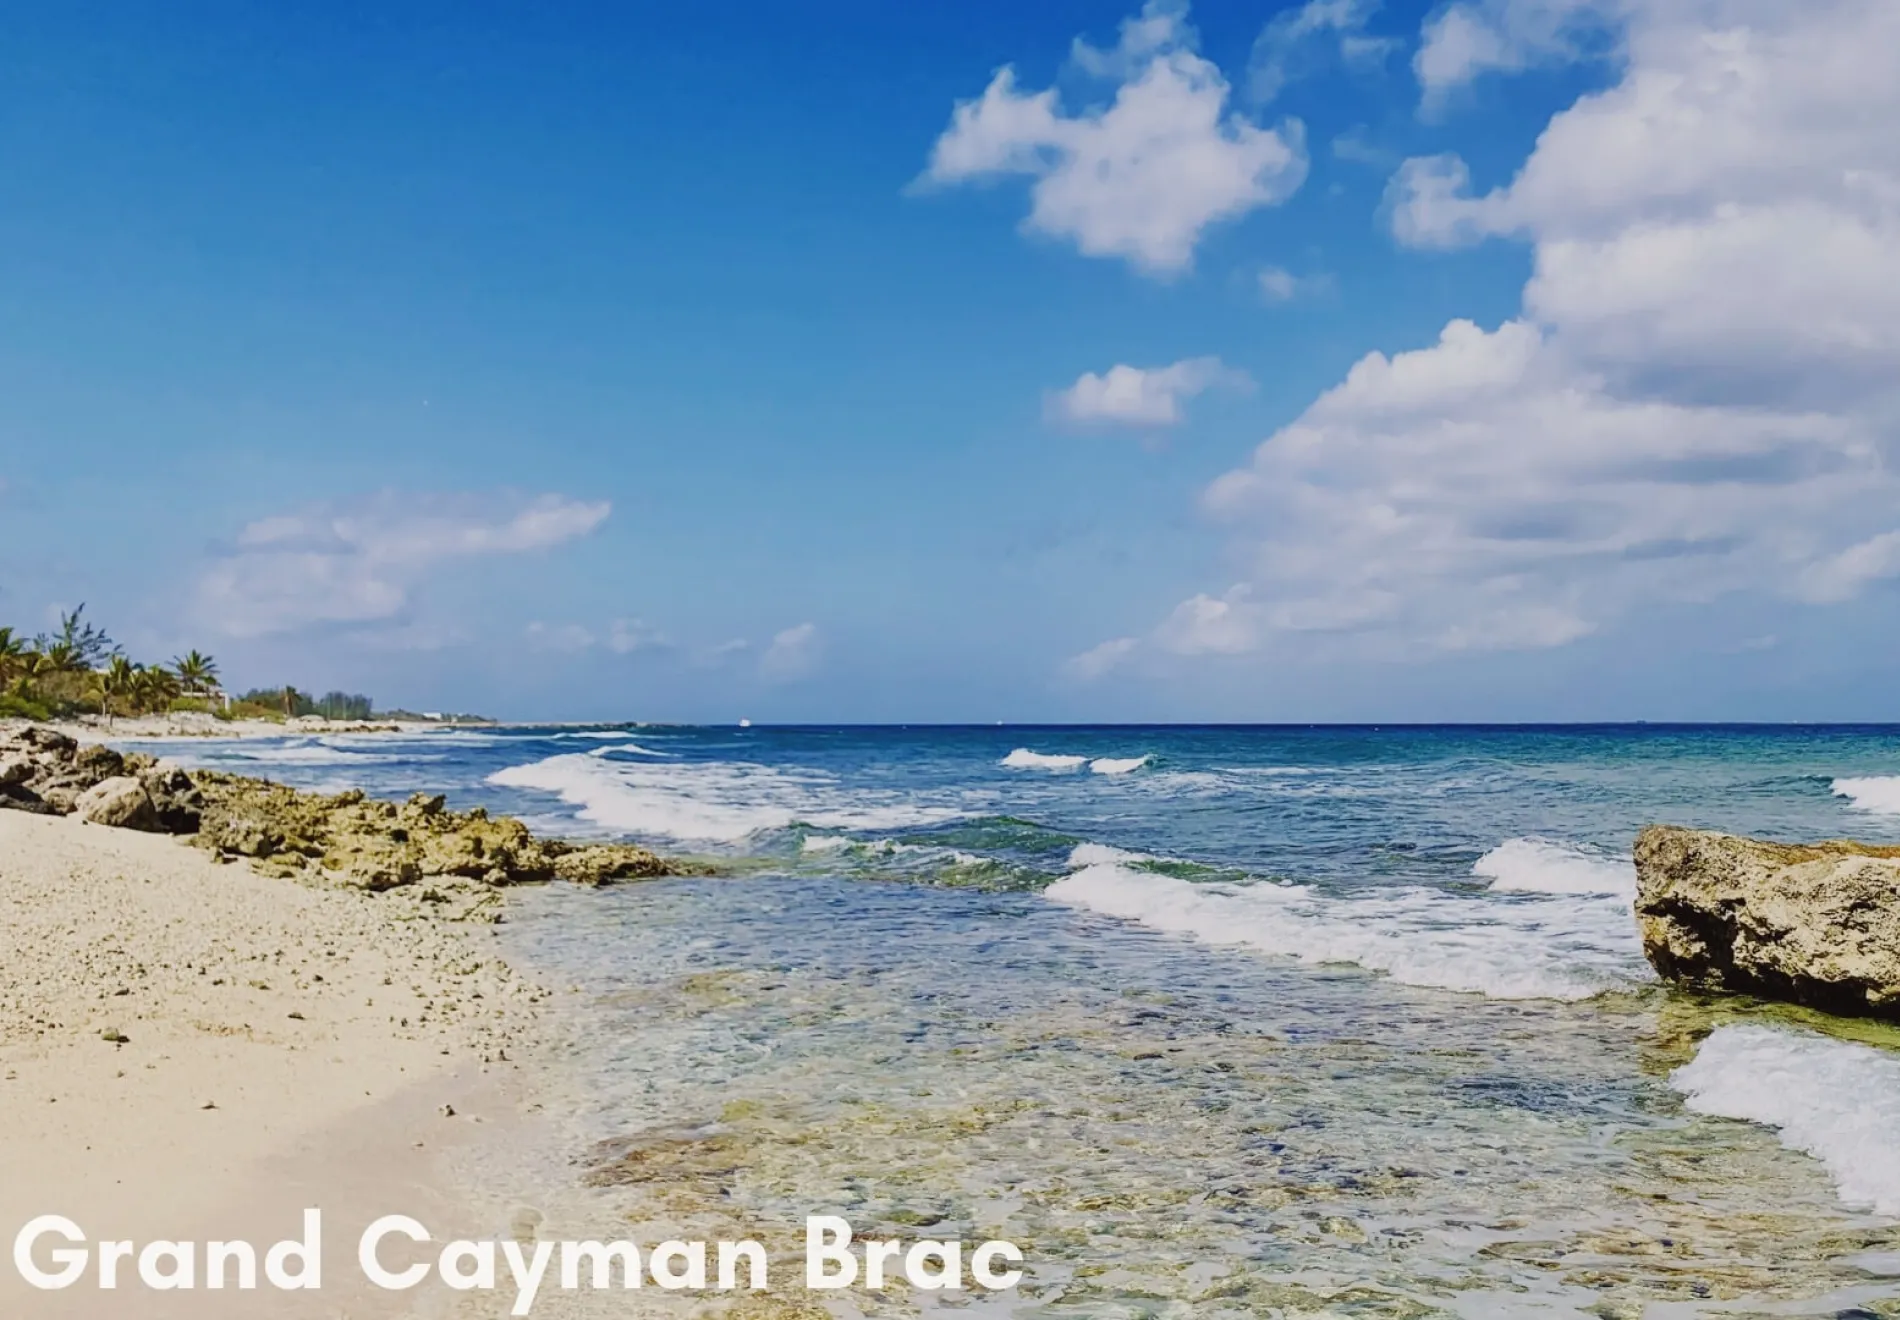 Grand Cayman Brac